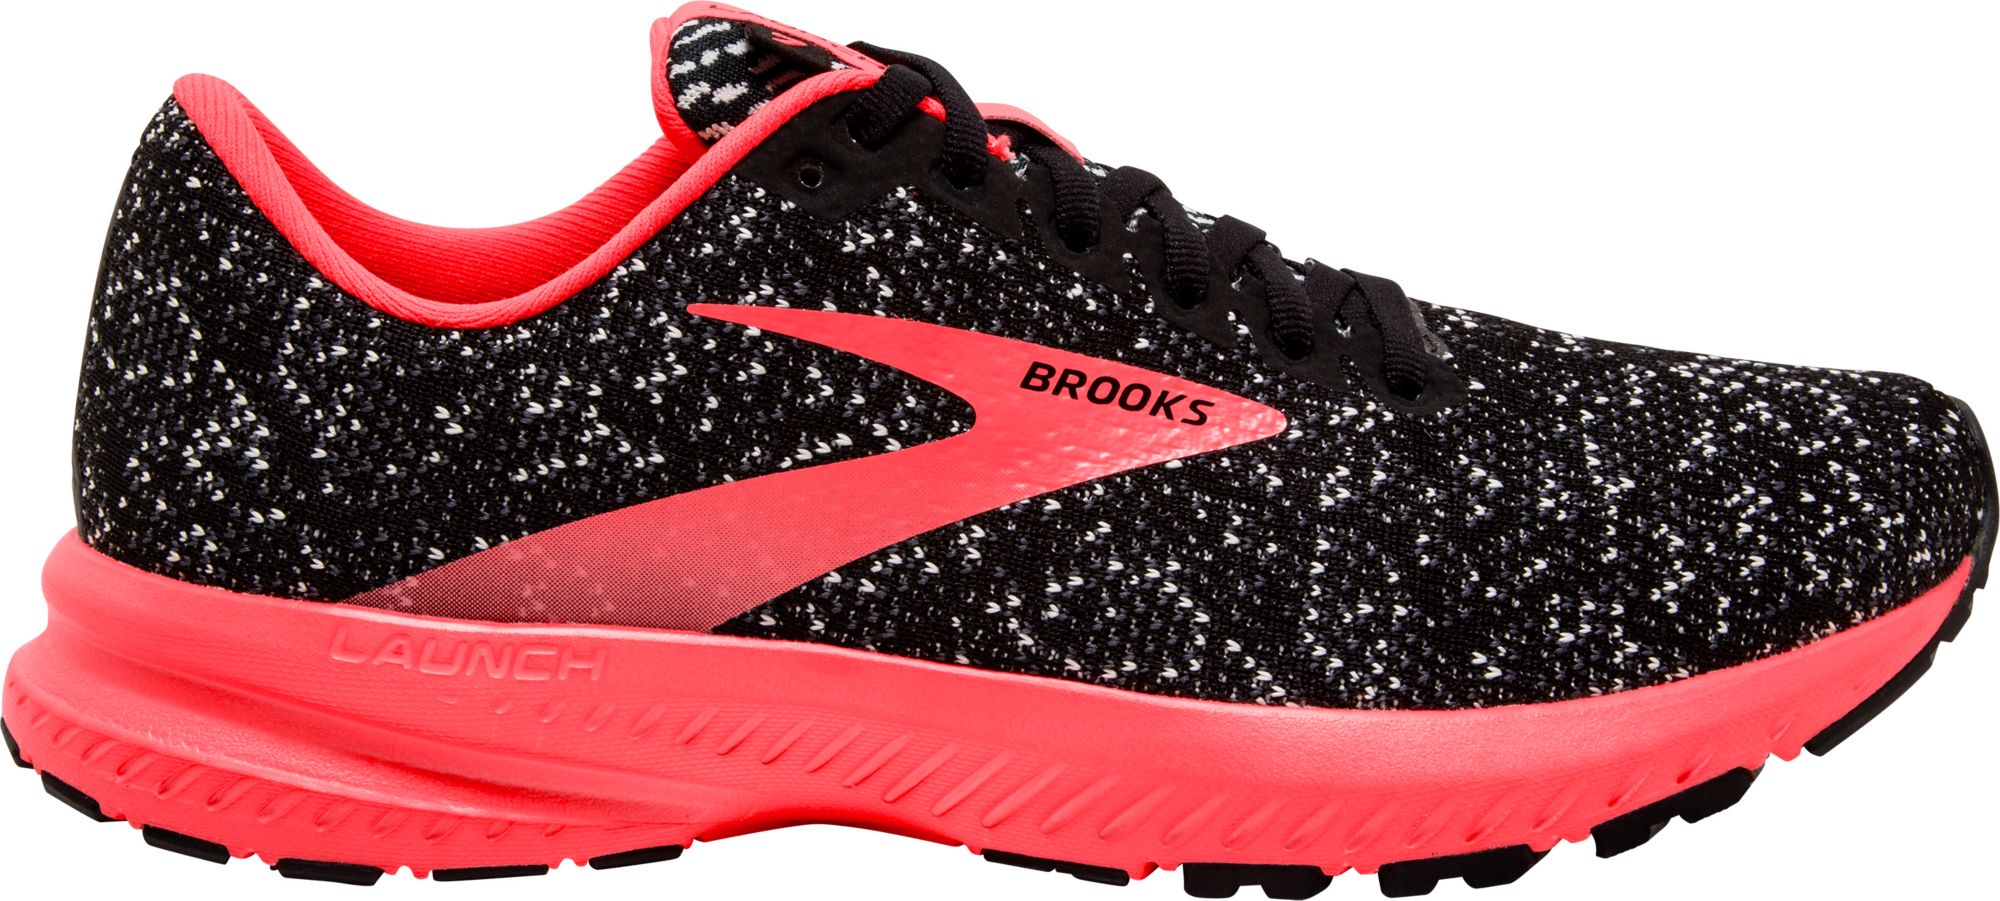 brooks women's launch 2 running shoes